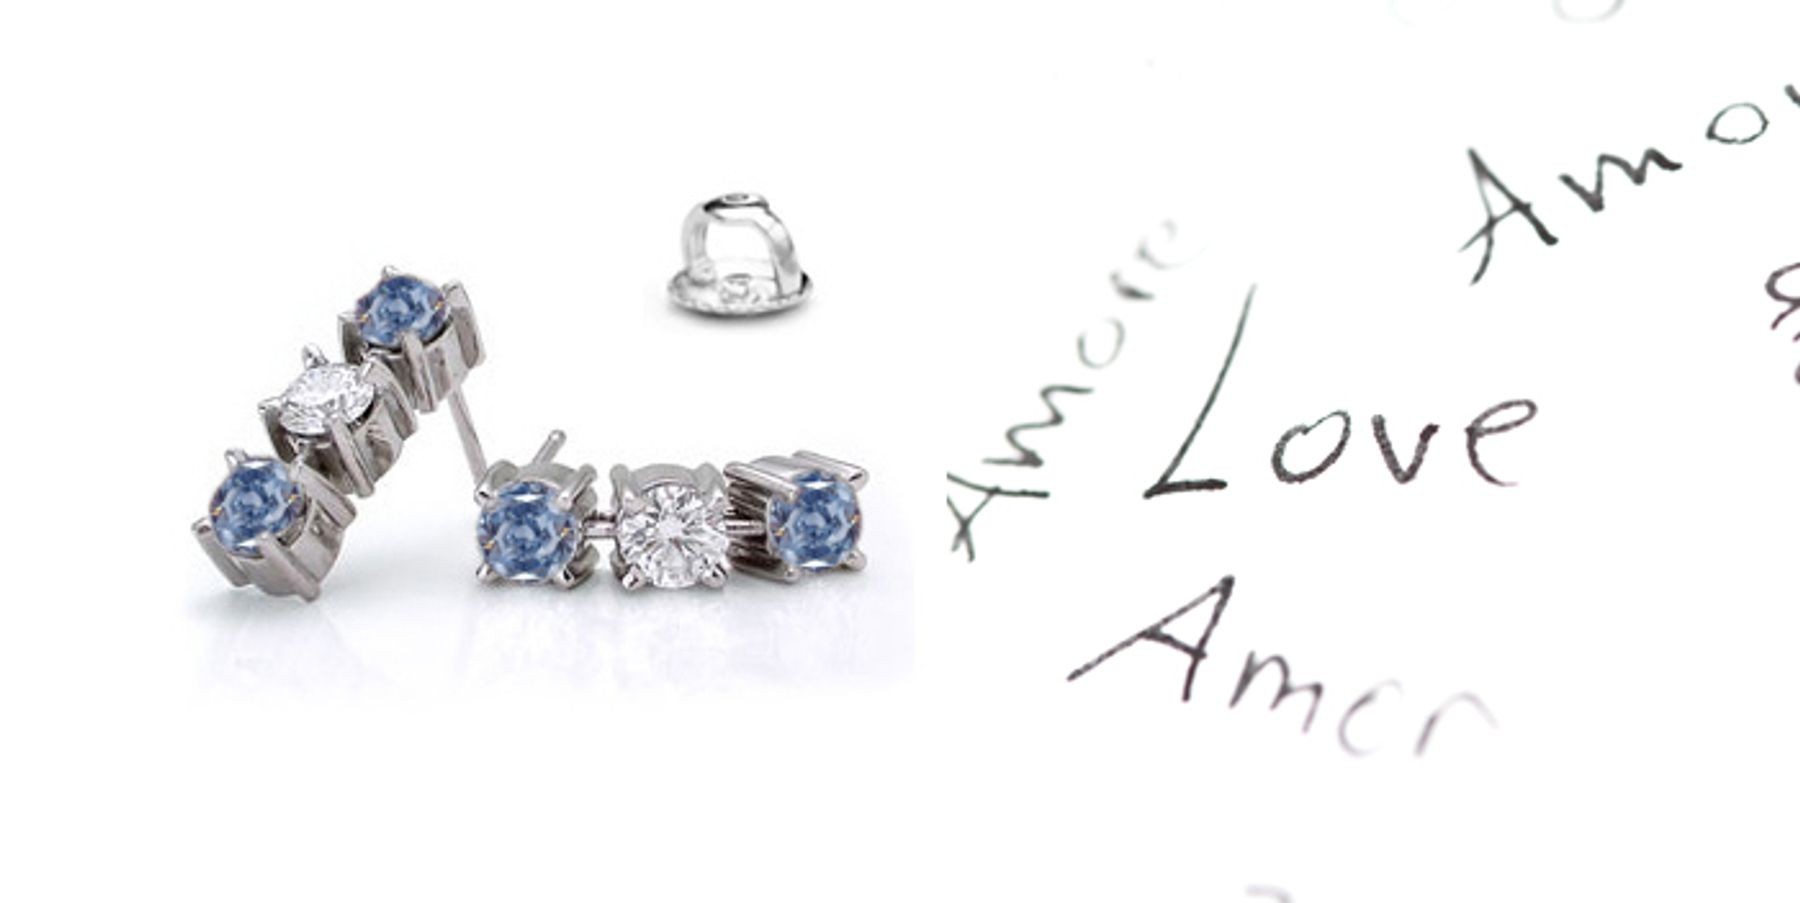 Exclusive Designs Colored Diamonds Designer Collection - Blue Colored Diamonds & White Diamonds Round Blue Diamond Gold or Platinum Earrings